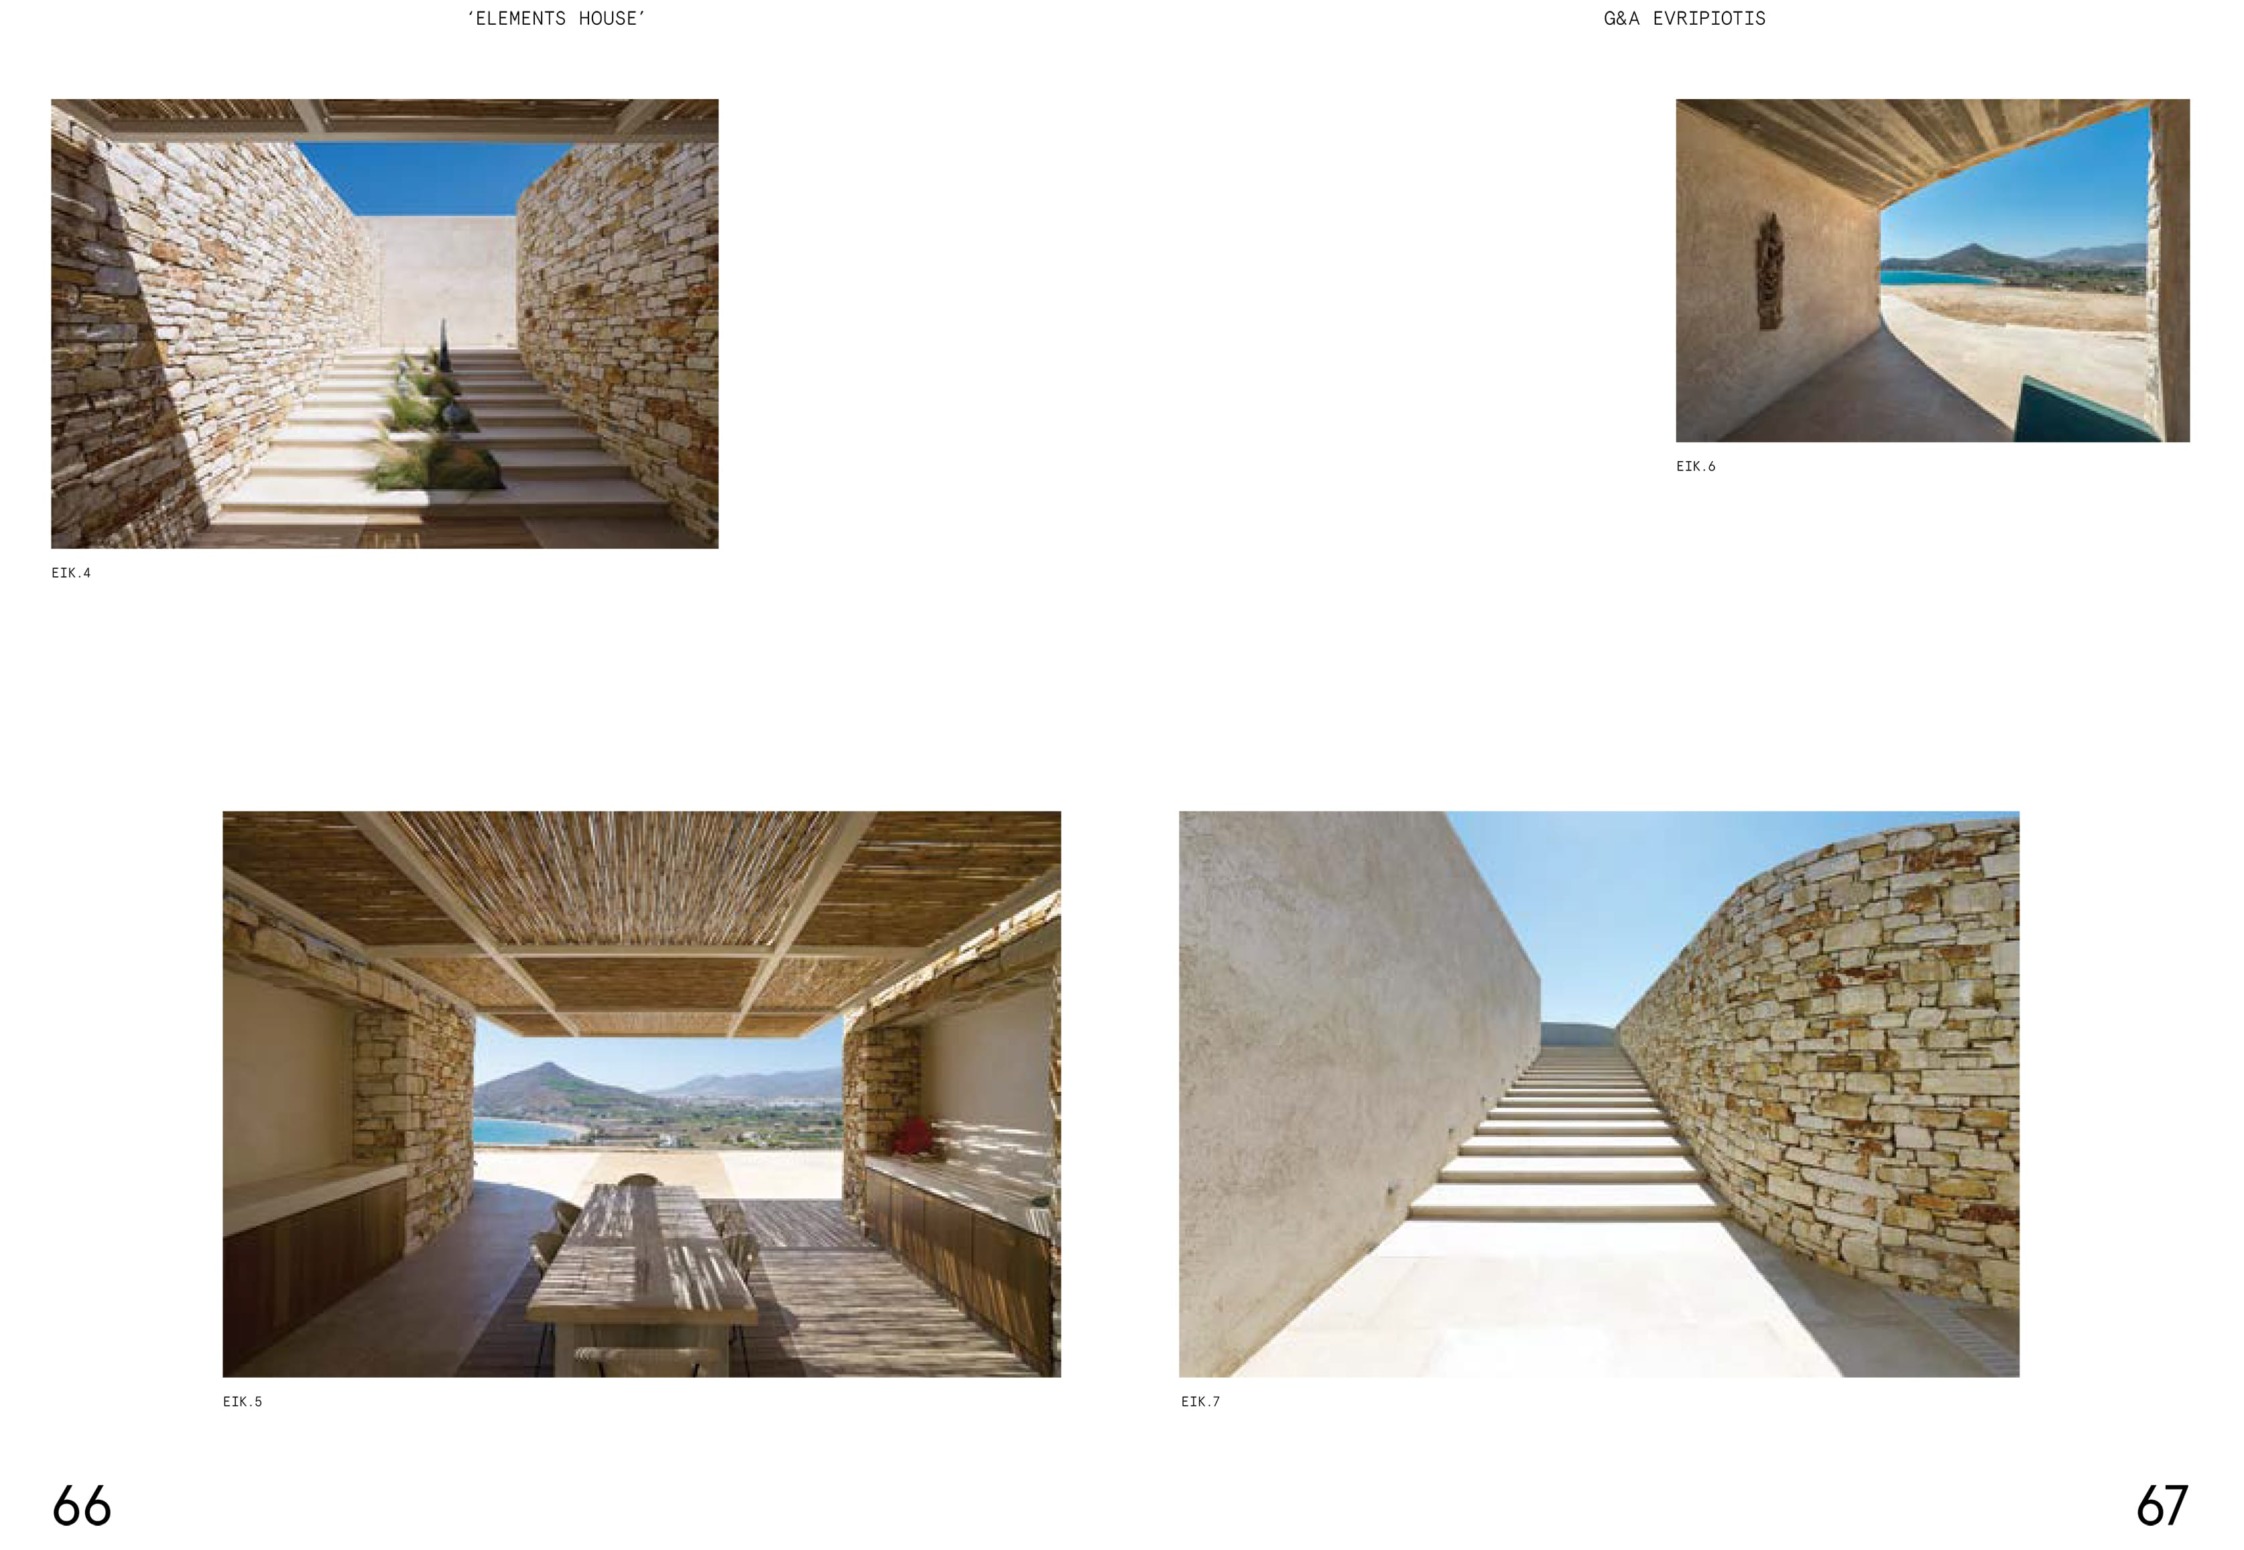 domes-163-elements-house-evripiotis-architects-03